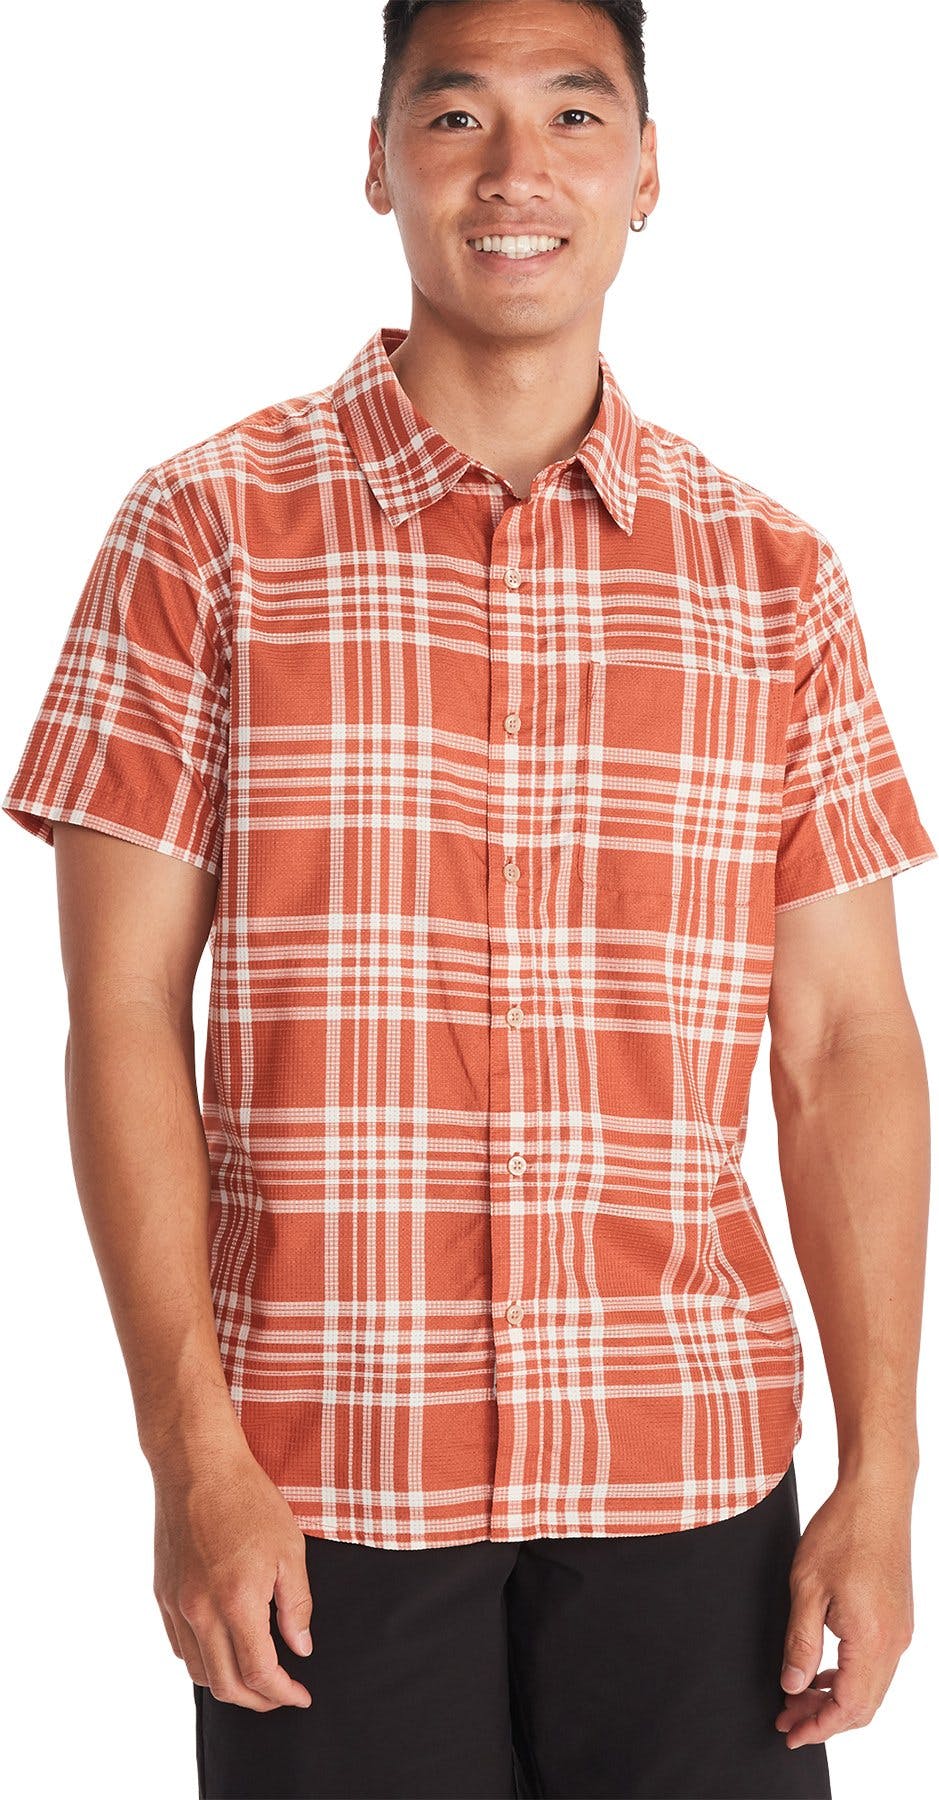 Product image for Aerobora Novelty Short-Sleeve Shirt - Men's